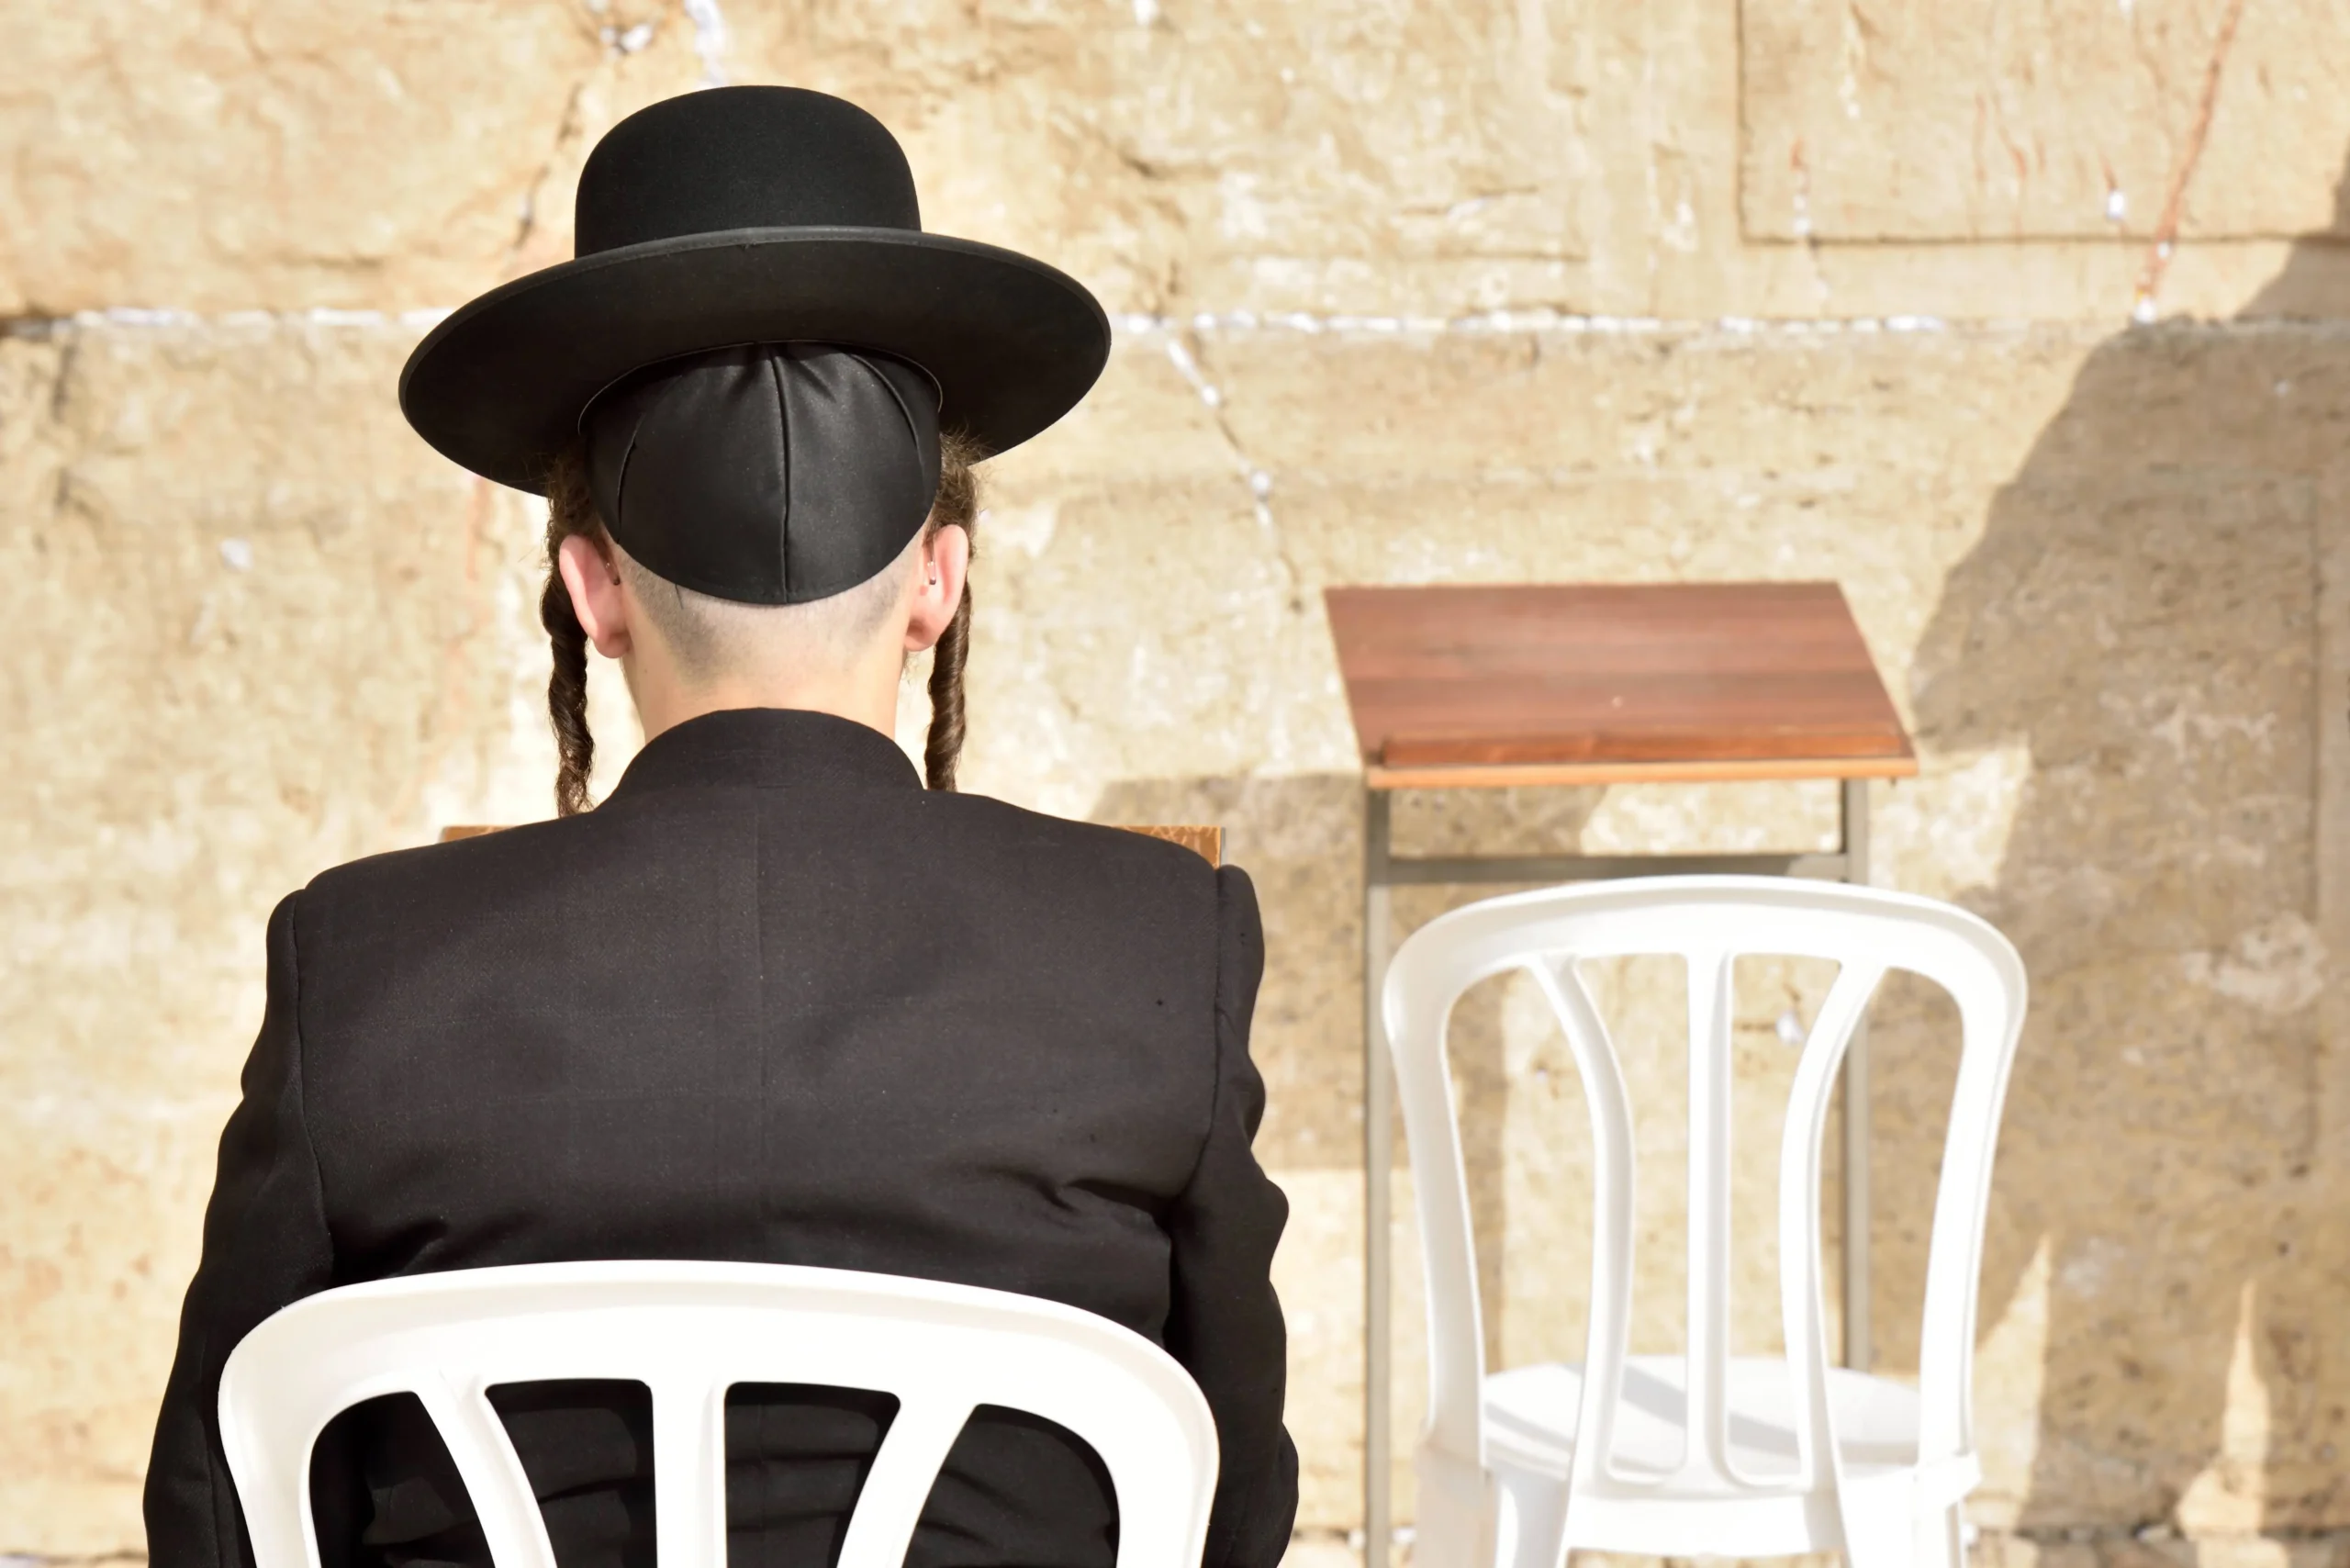 Will Netanyahu Conscript the Haredim?